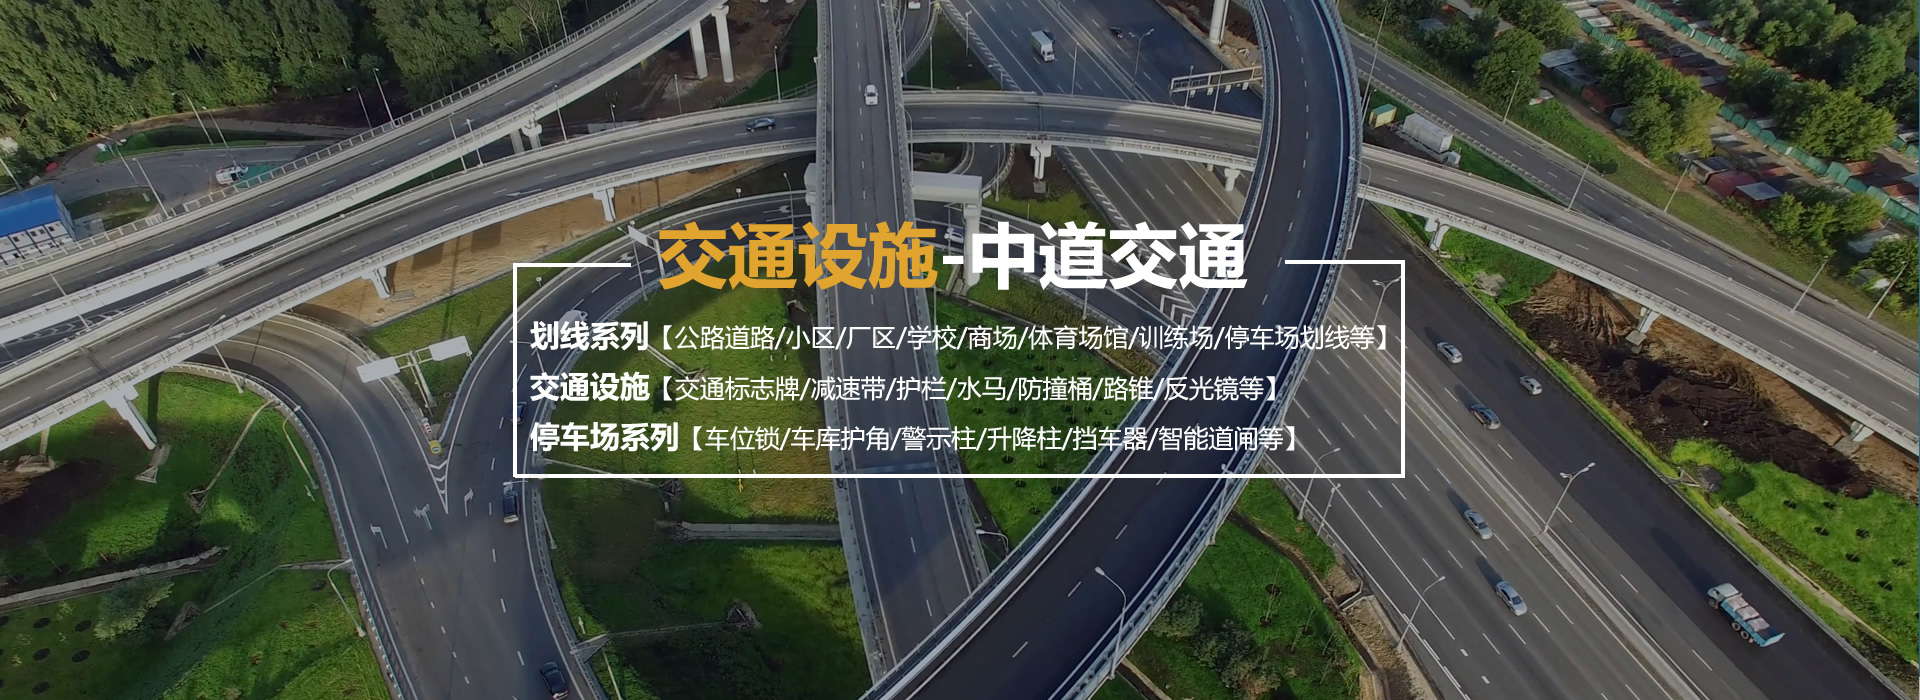 ju11net九州手机版检测地址,青岛标志牌,青岛减速带